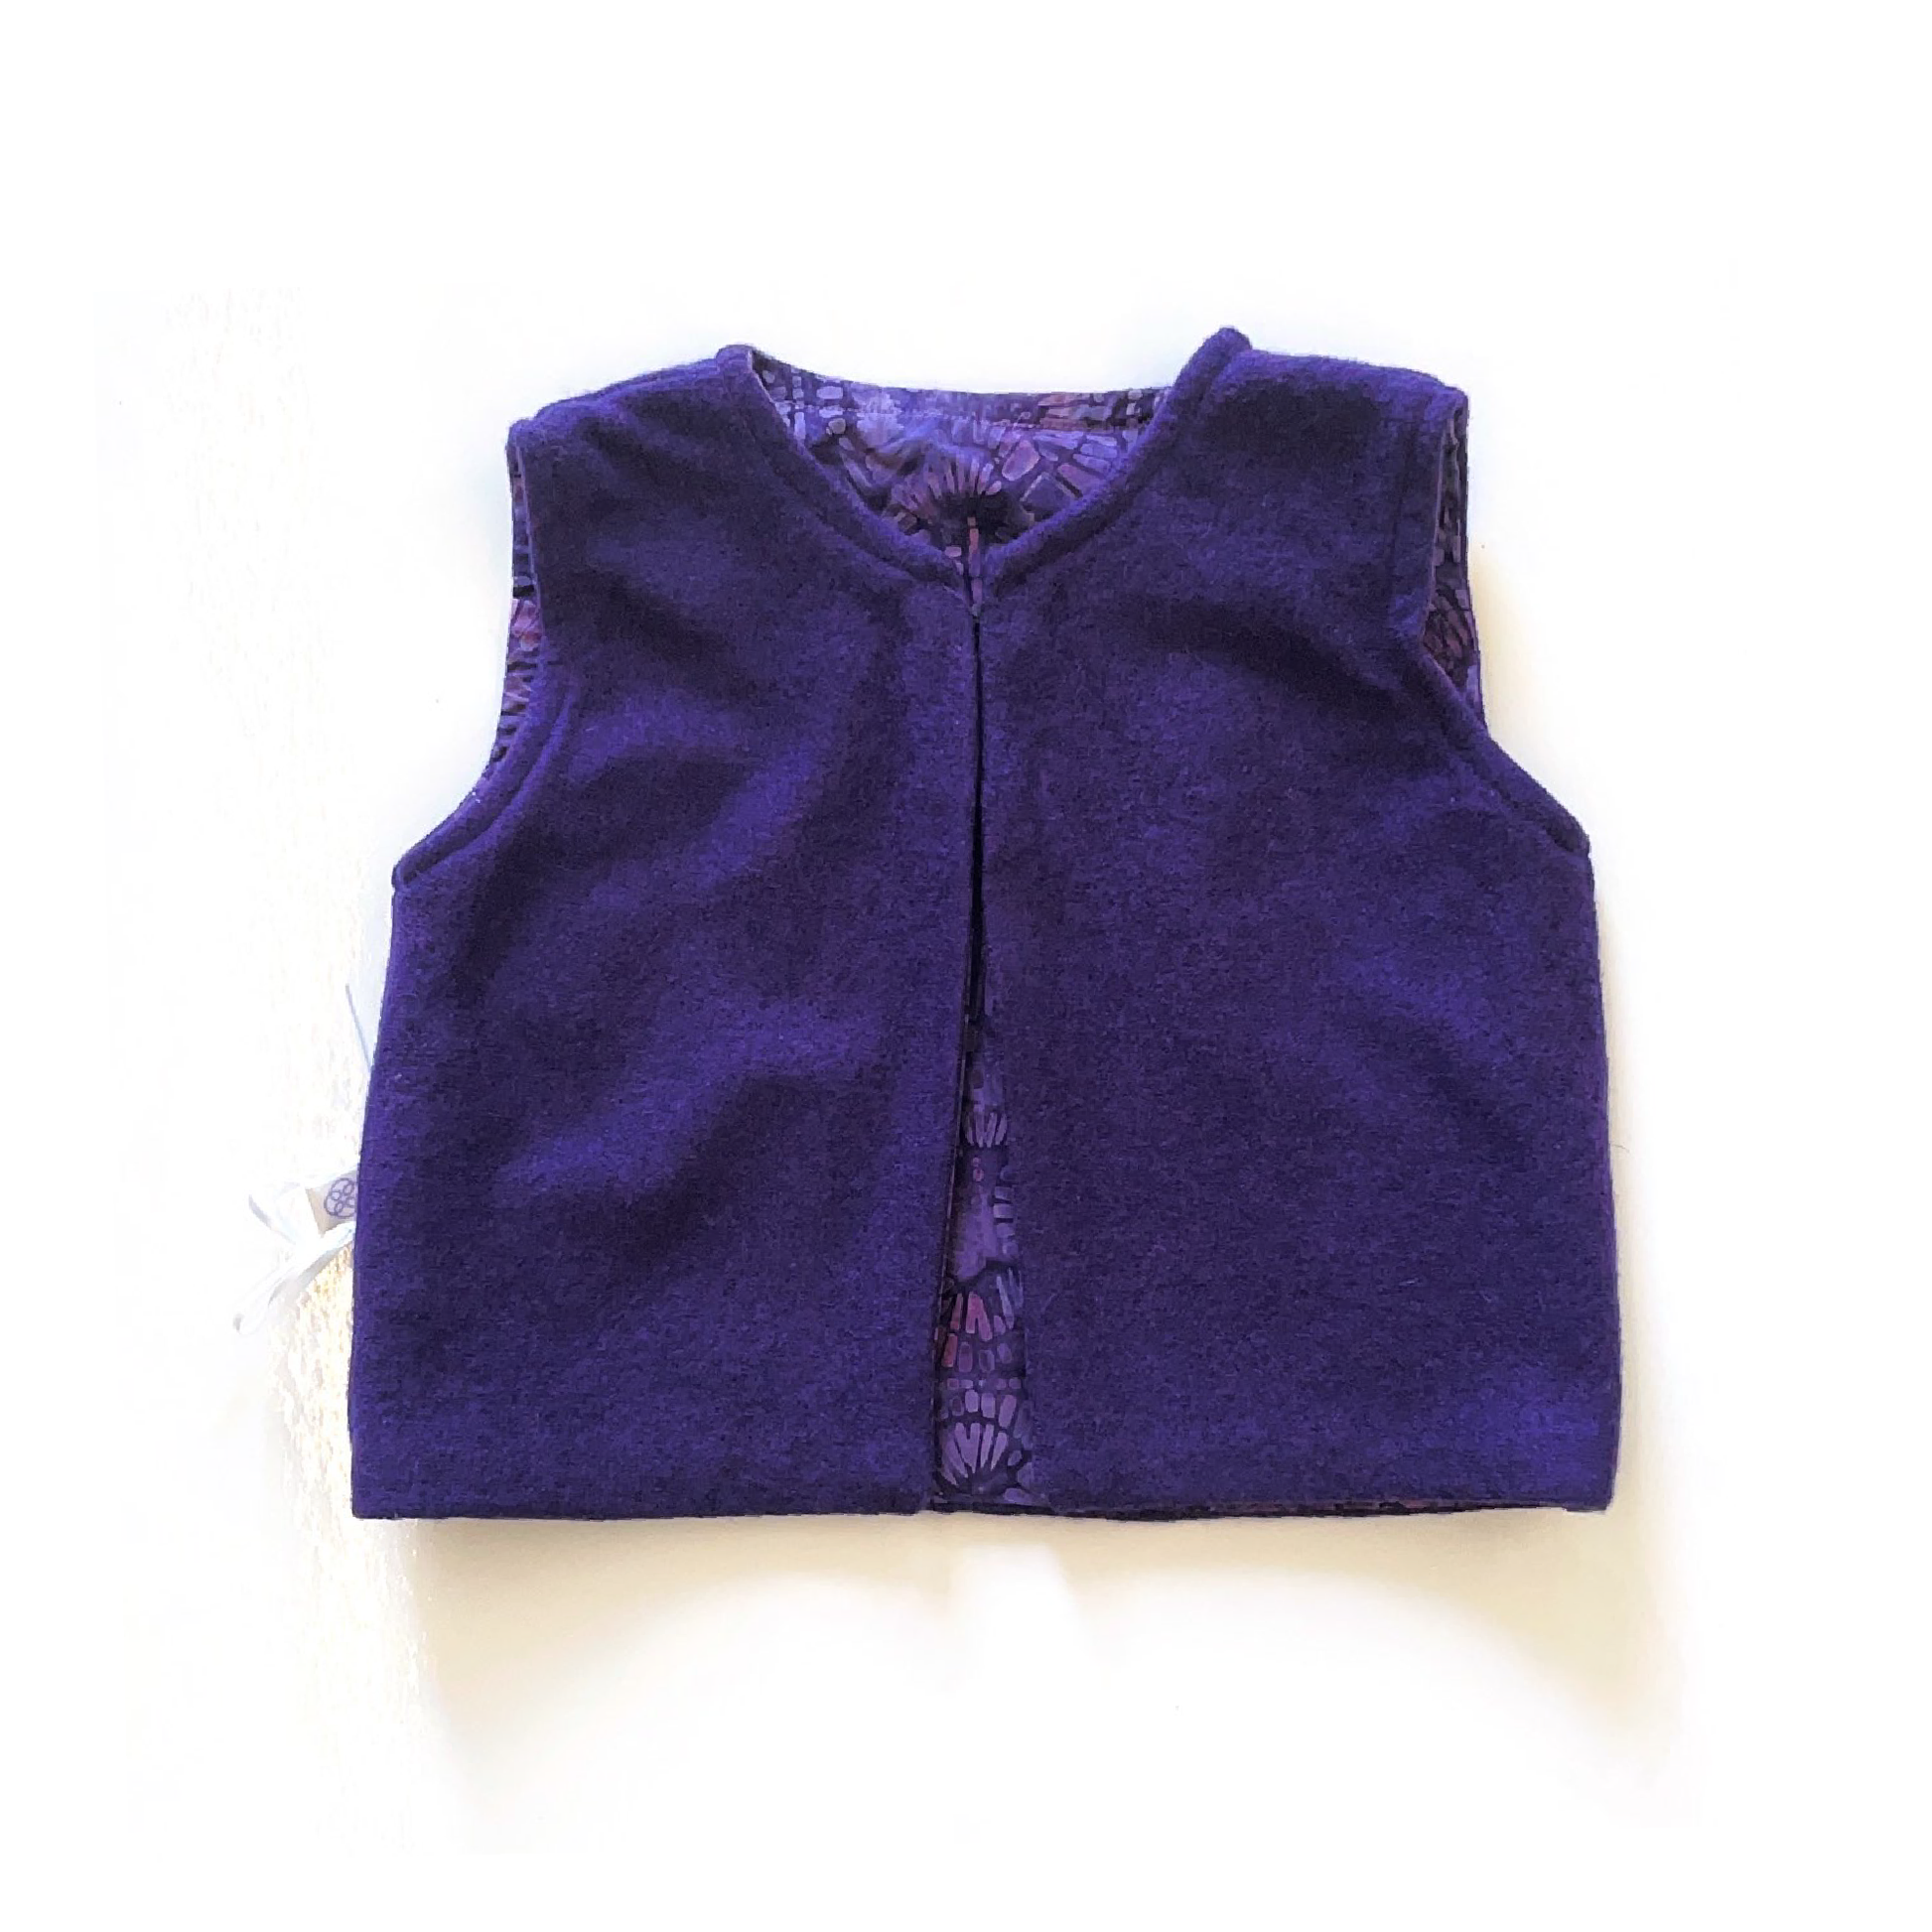 Dark purple vest with purple tonnage lining.